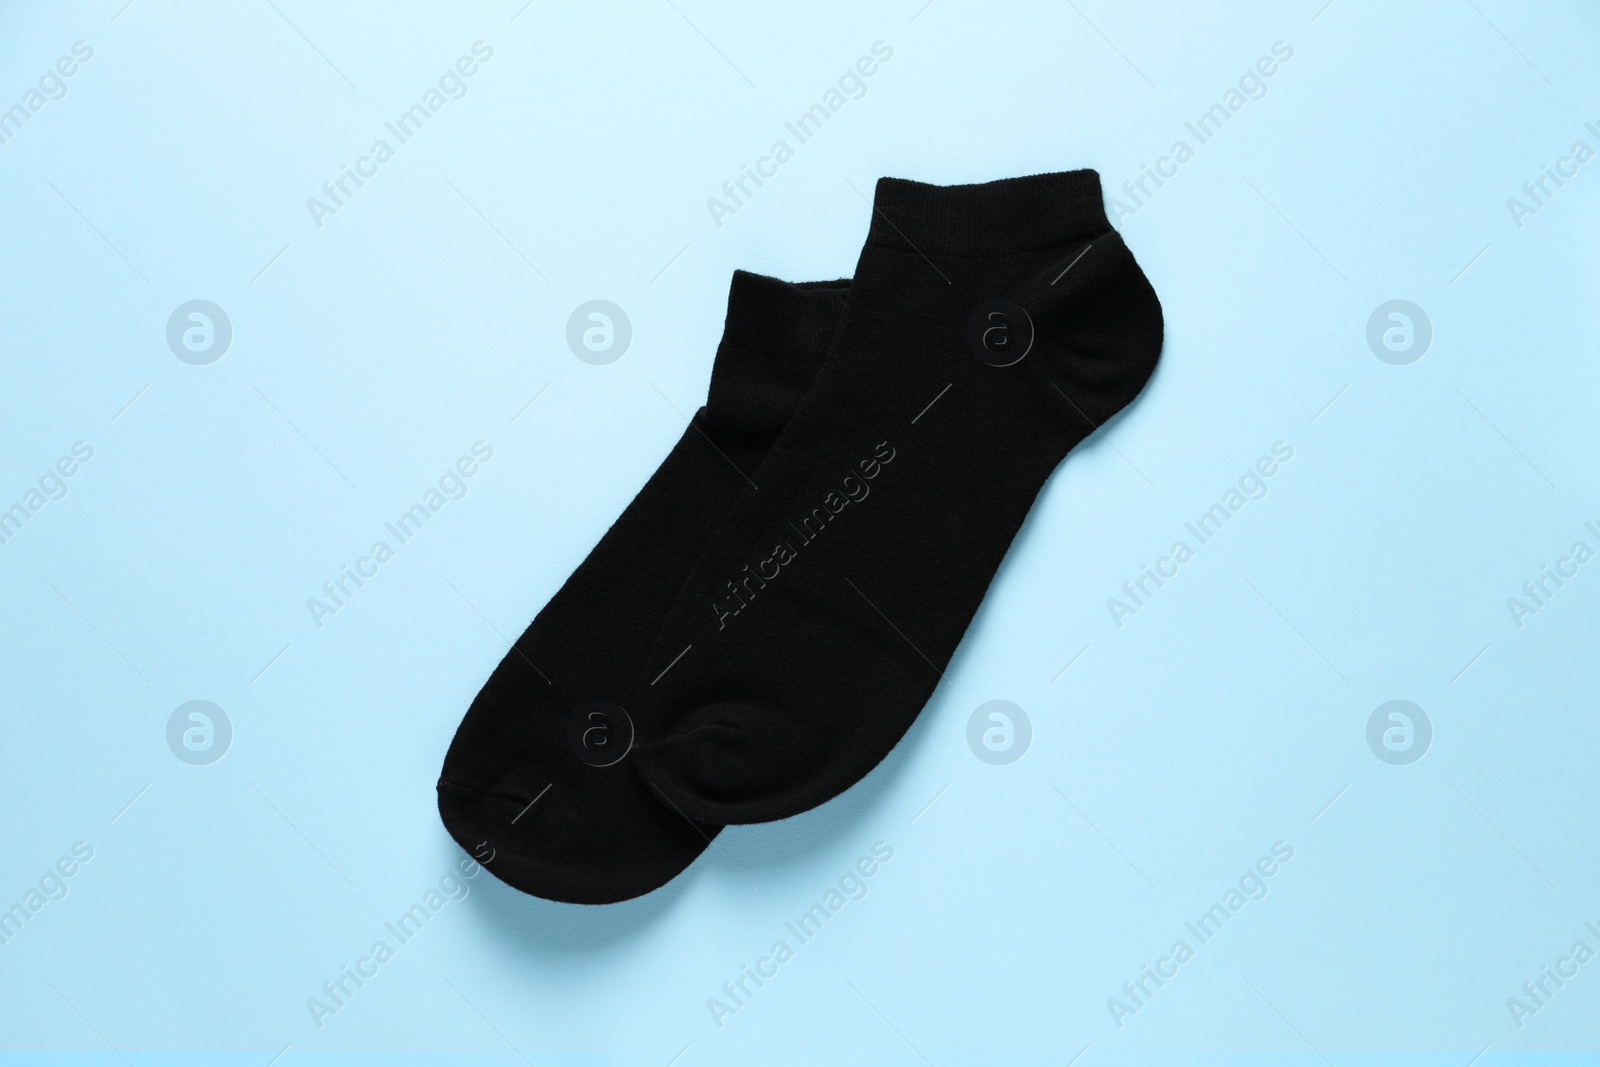 Photo of Pair of black socks on light blue background, flat lay